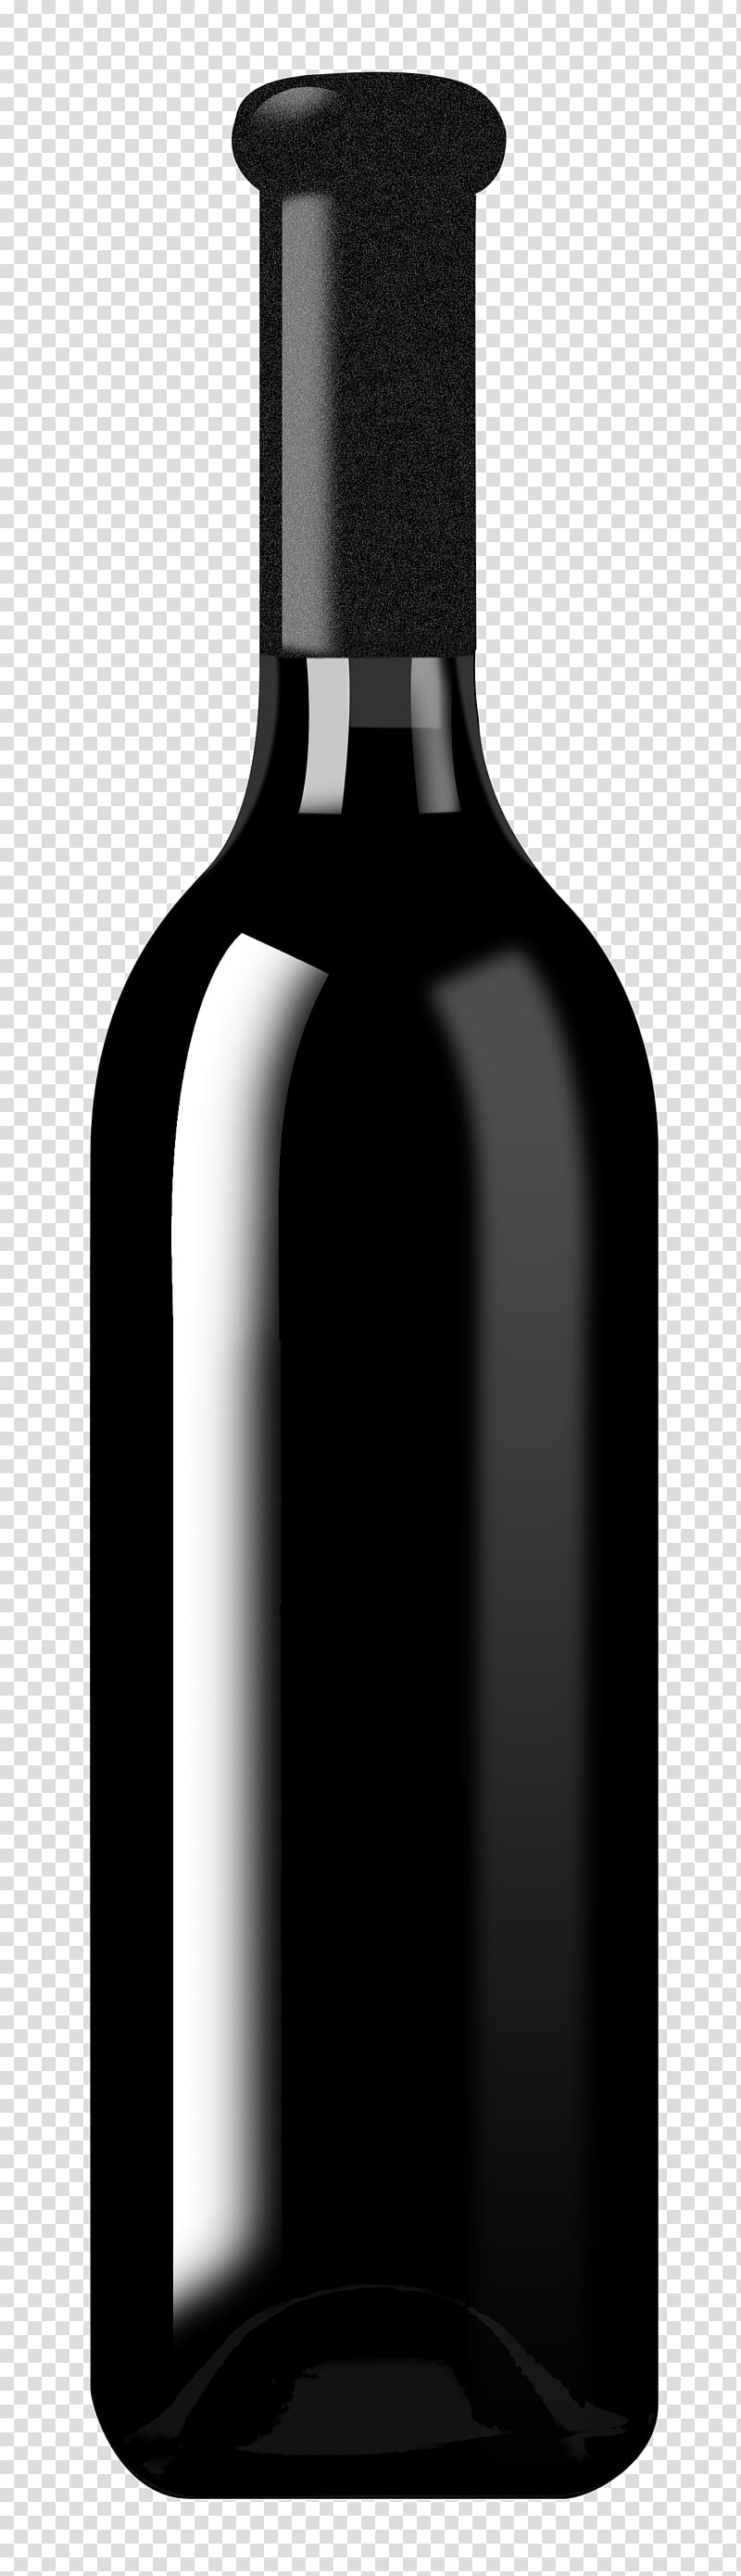 Red Wine Champagne Bottle Liqueur, Black wine bottle transparent background PNG clipart